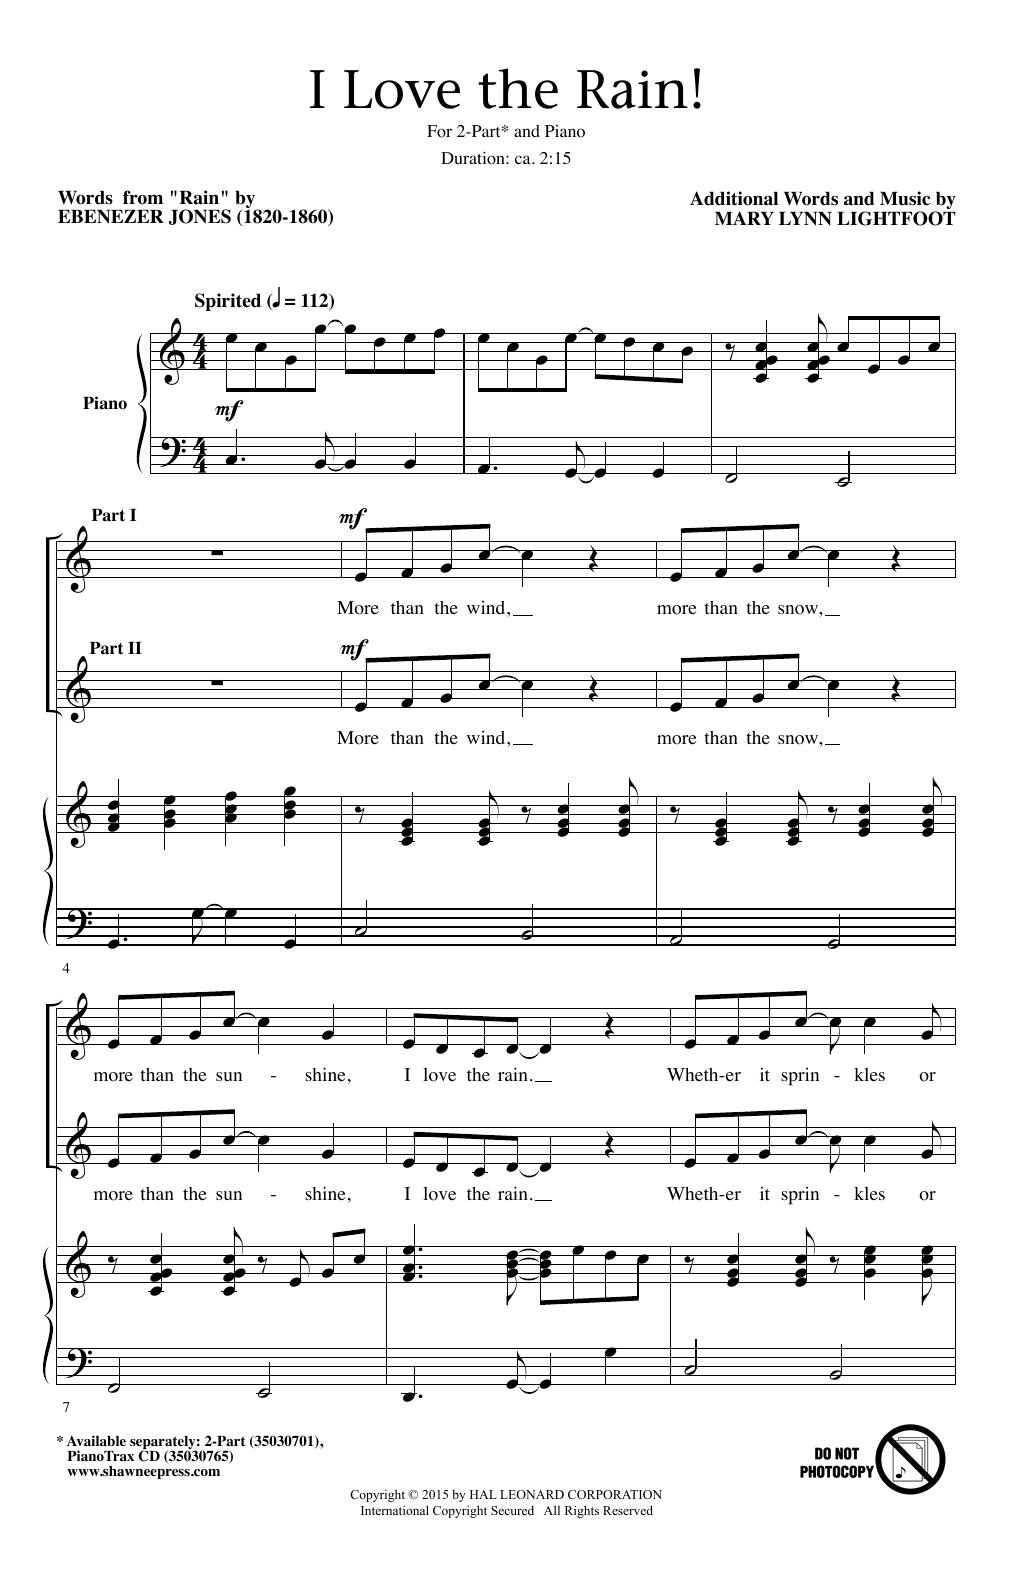 Mary Lynn Lightfoot I Love The Rain! Sheet Music Notes & Chords for 2-Part Choir - Download or Print PDF